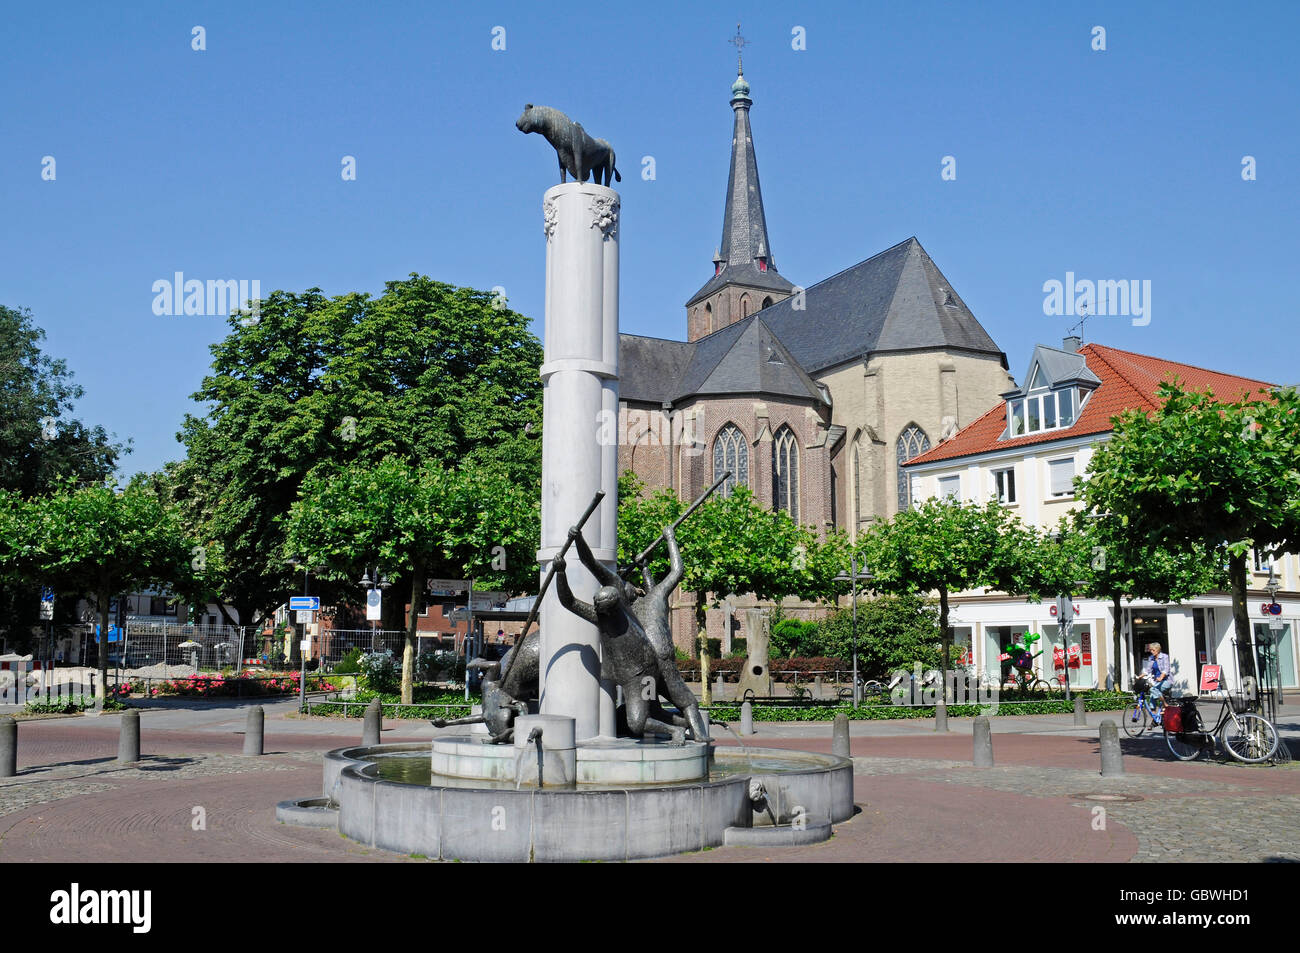 Dragon's Fountain, St Mary Magdalene Church, market square, Geldern, Lower Rhine region, North Rhine-Westphalia, Germany Stock Photo